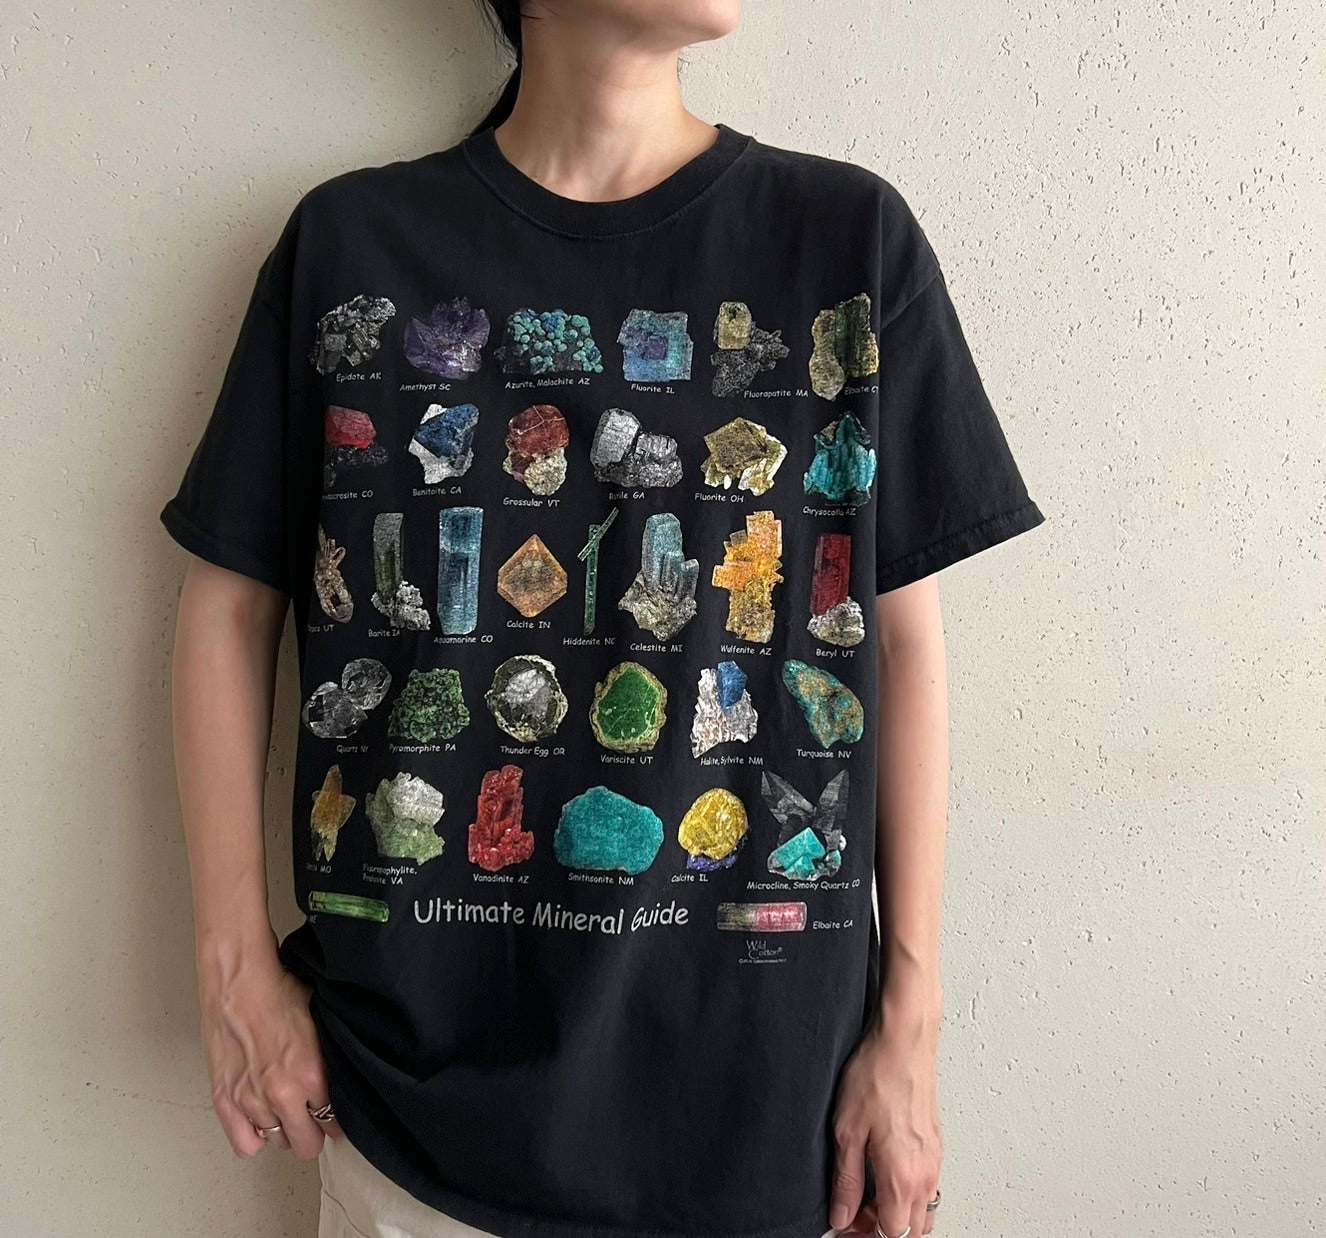 Science Museum of Minnesota Printed T-shirt